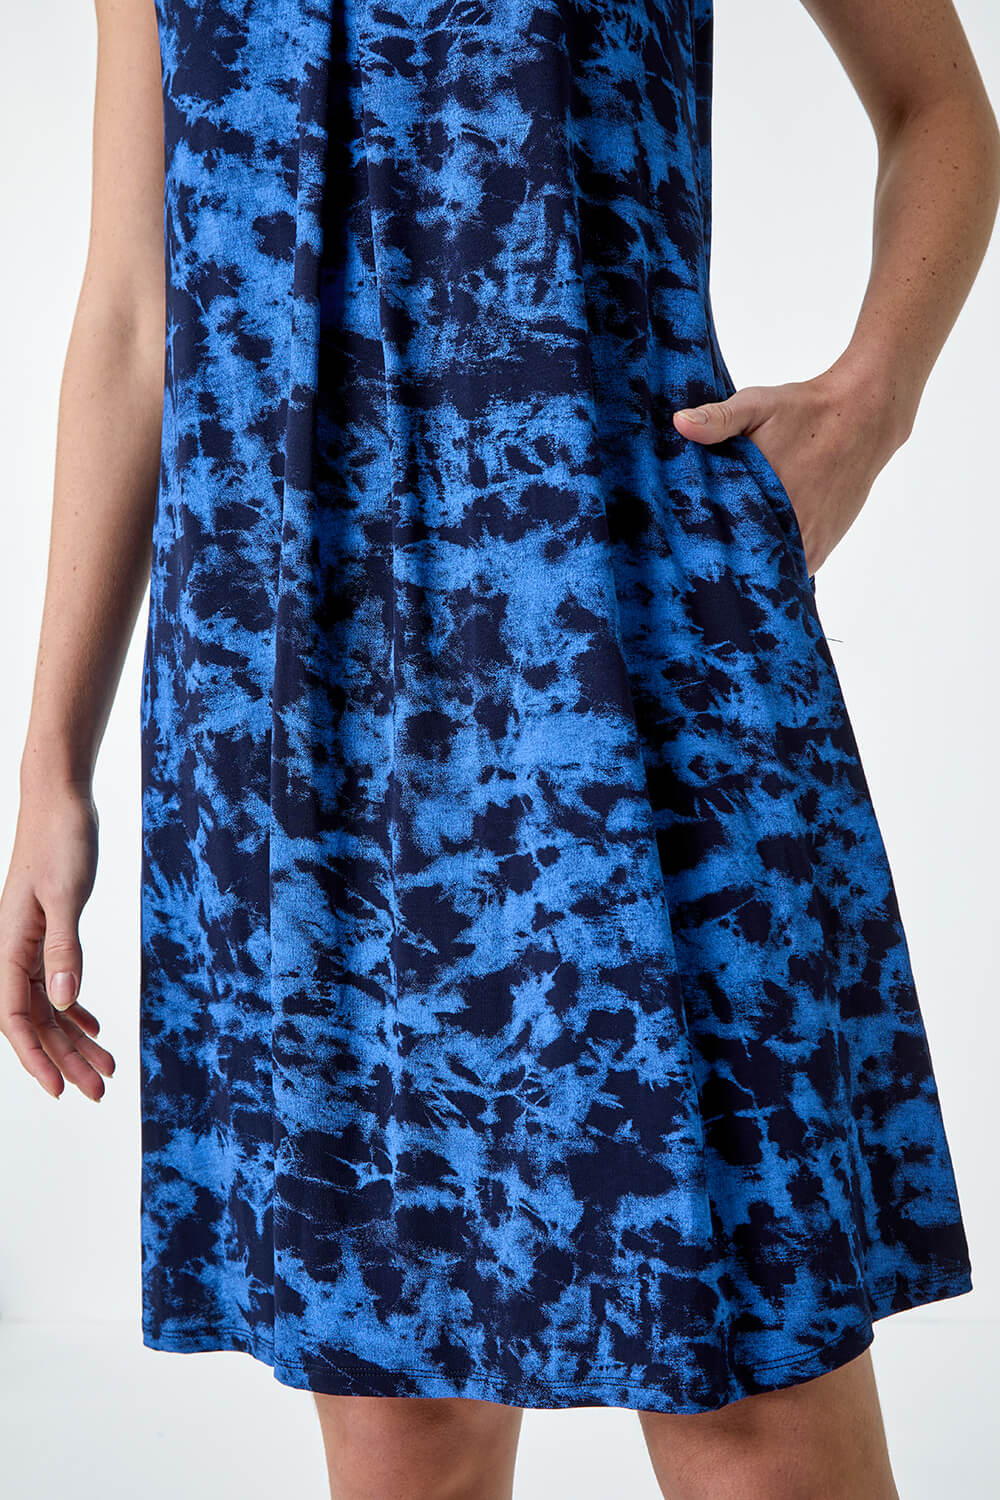 Blue Tie Dye Stretch Pocket Swing Dress, Image 5 of 5